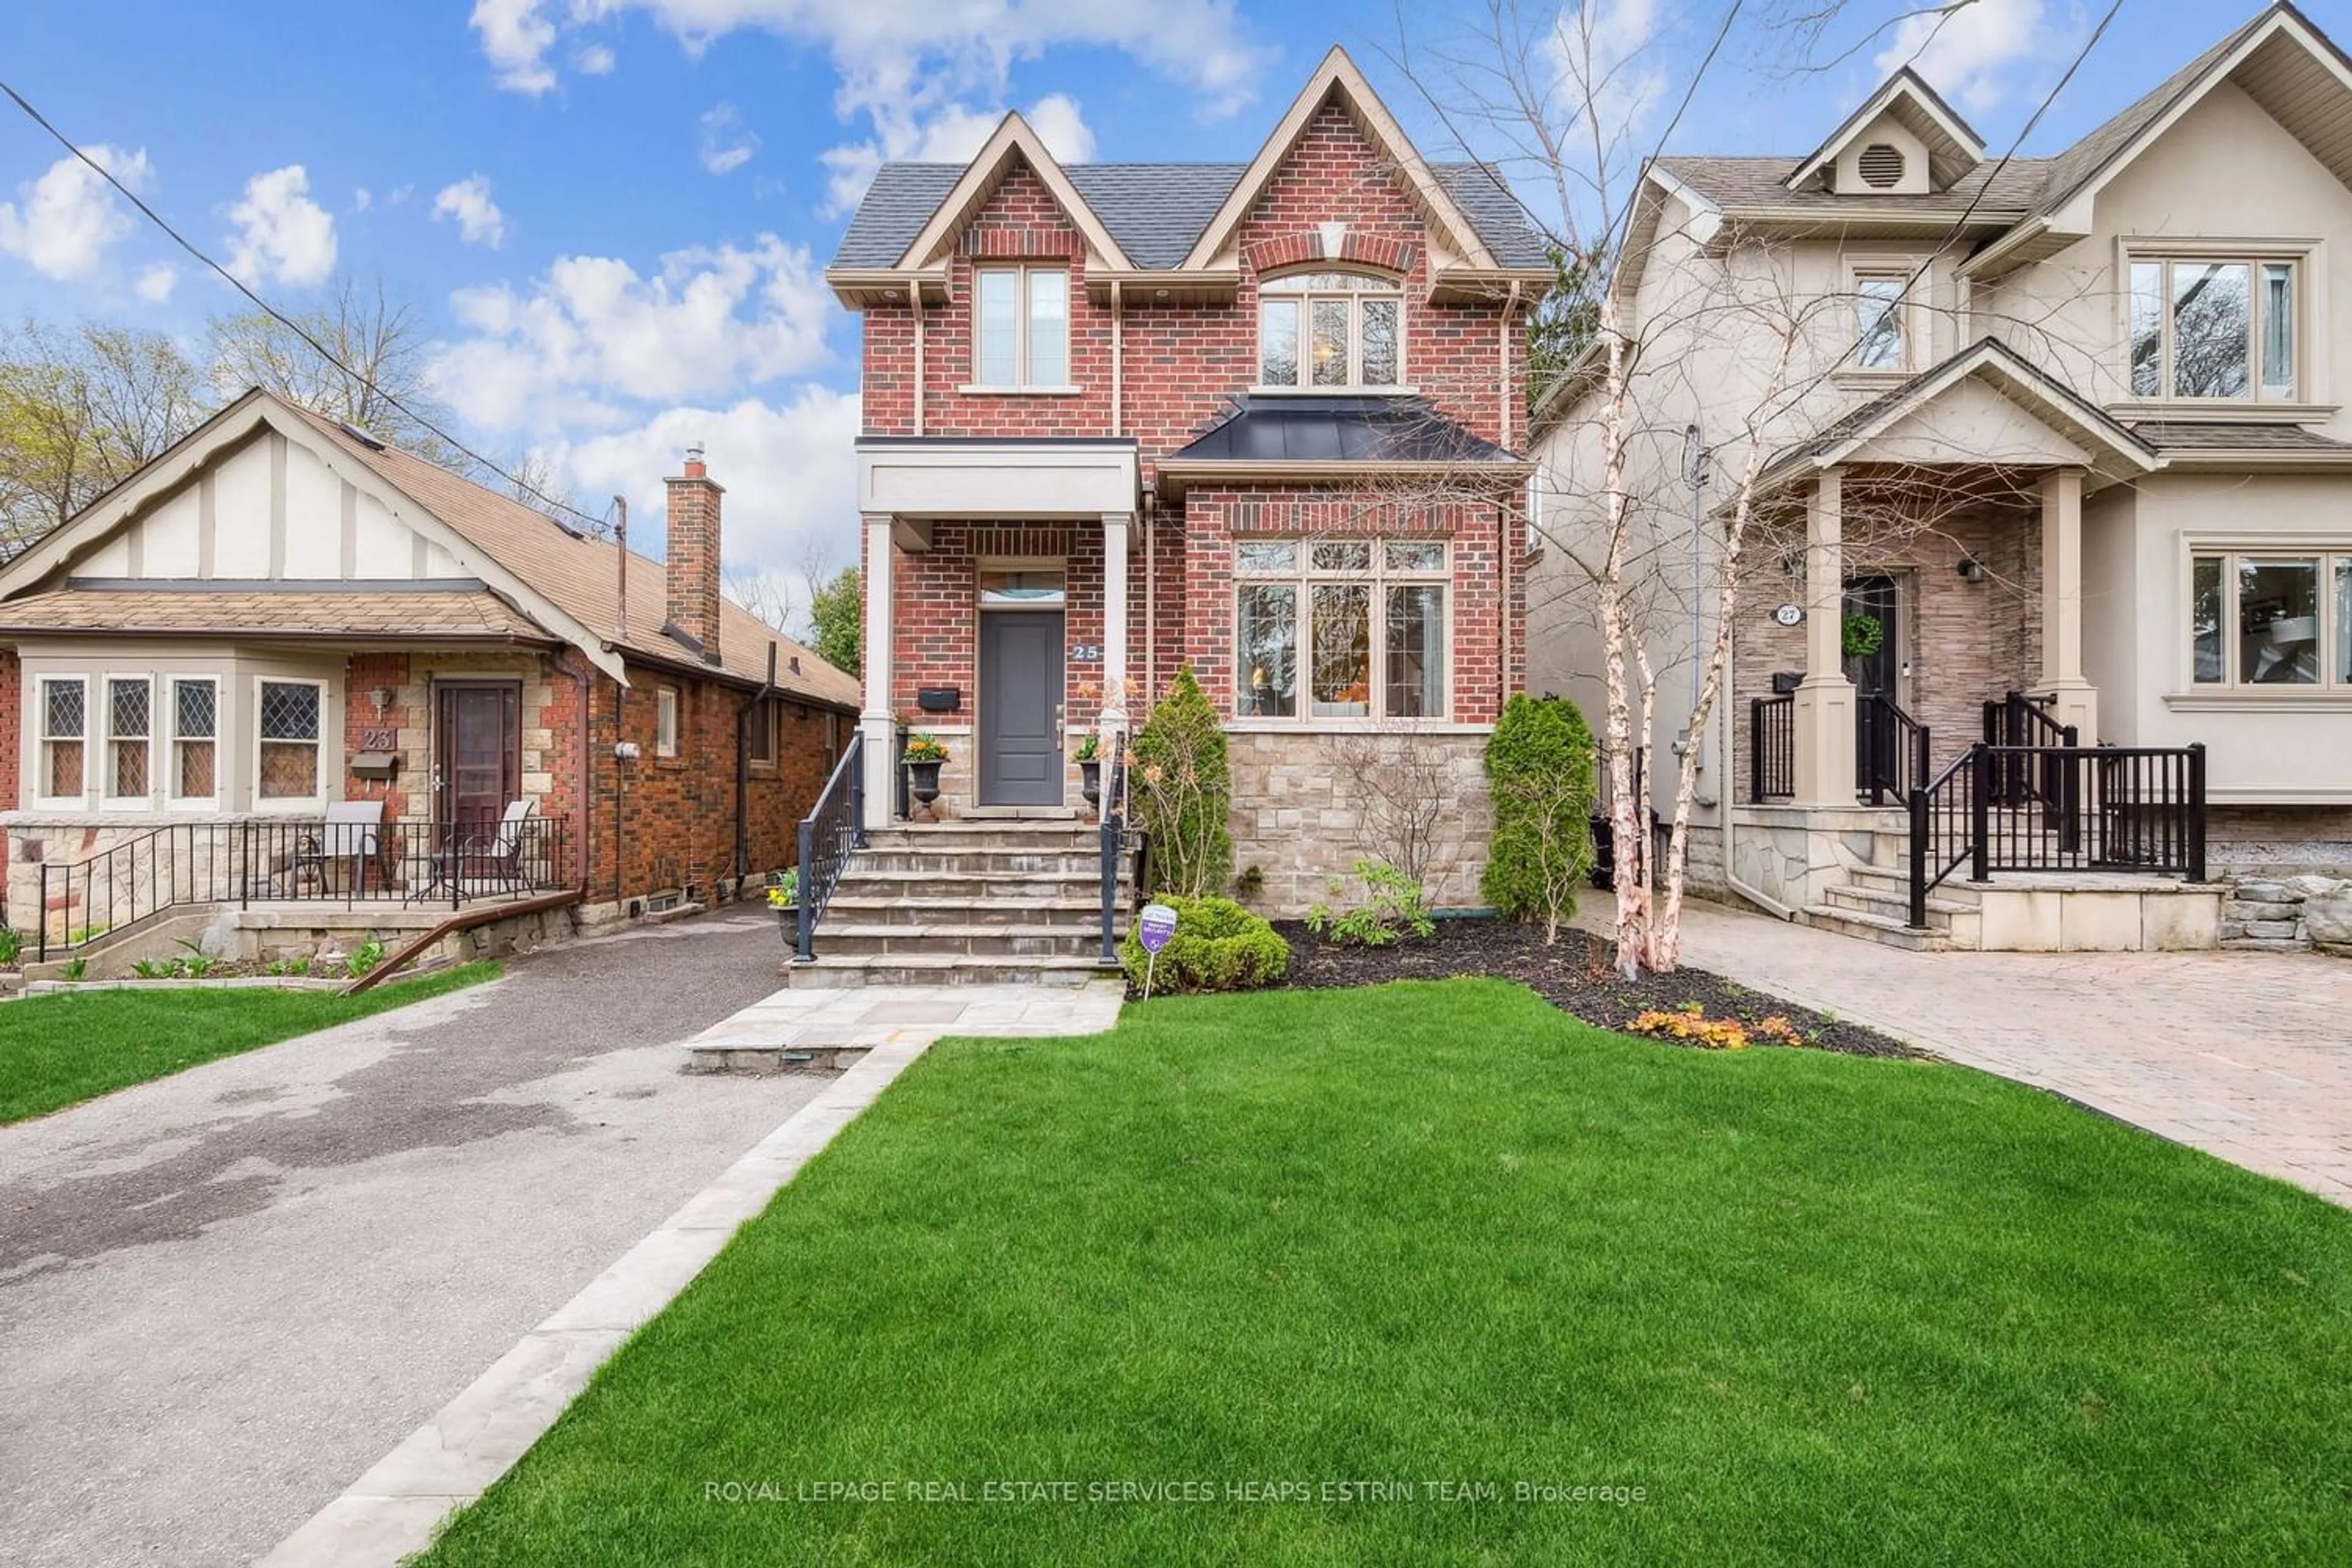 Home with brick exterior material for 25 Southvale Dr, Toronto Ontario M4G 1G1